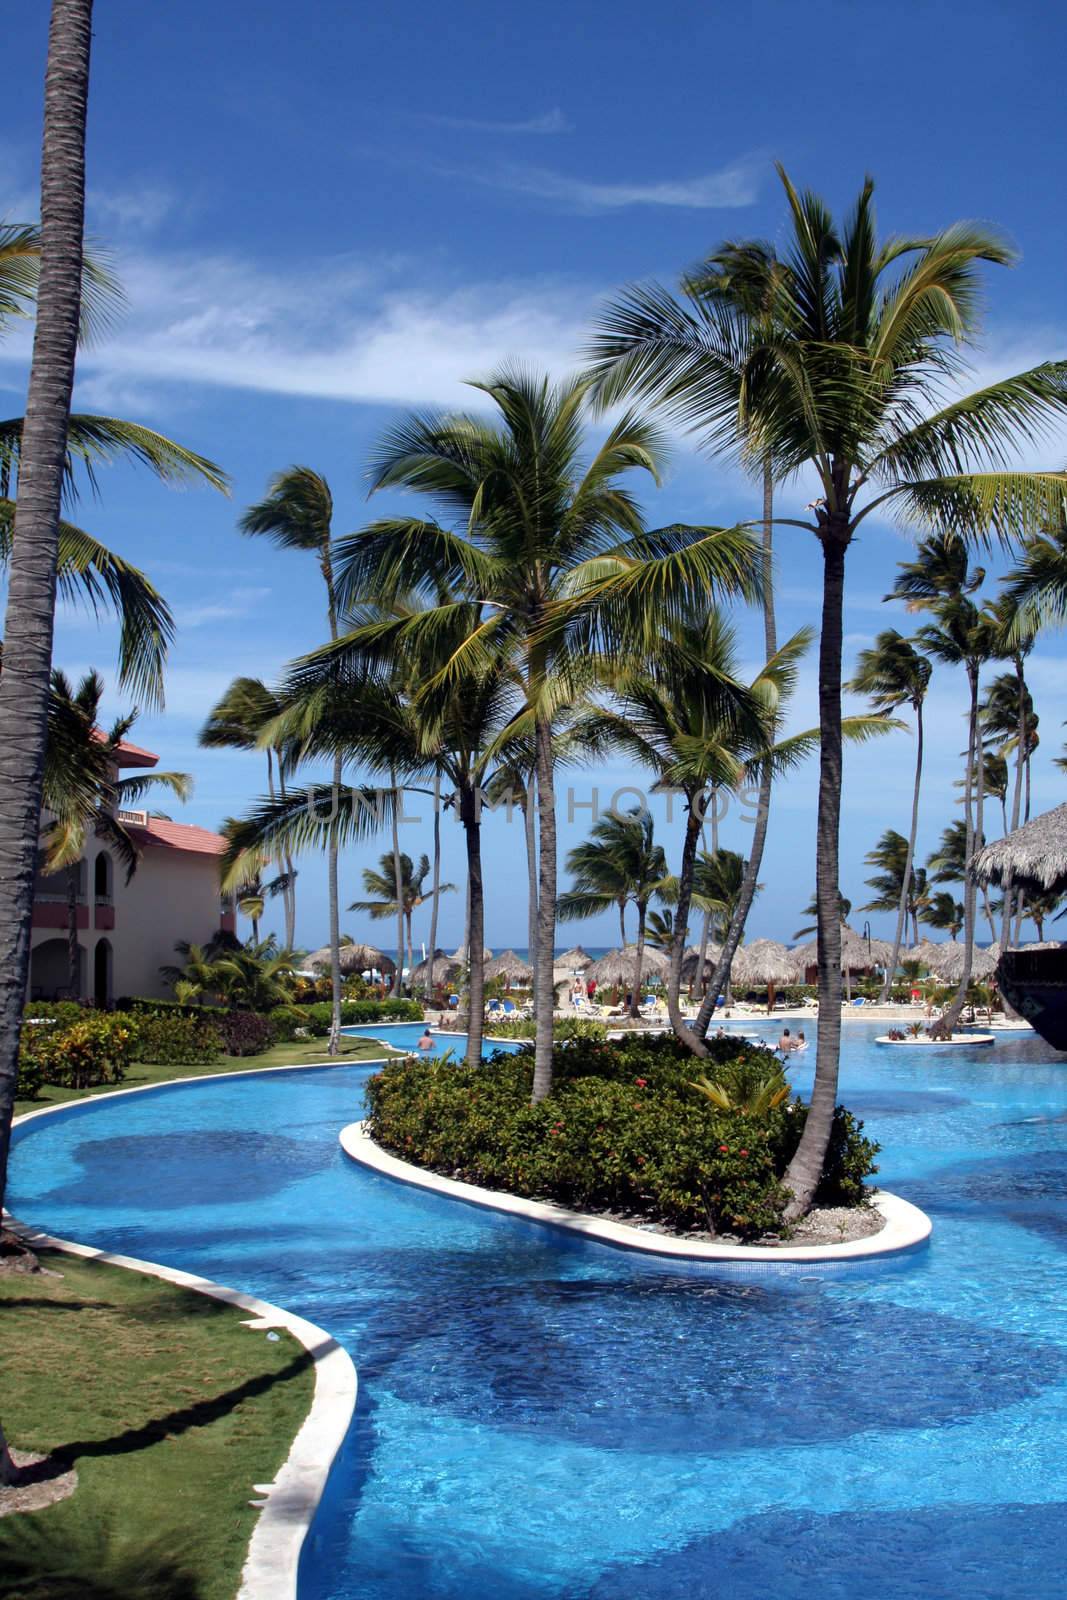 The beautiful pool at a tropical resort.